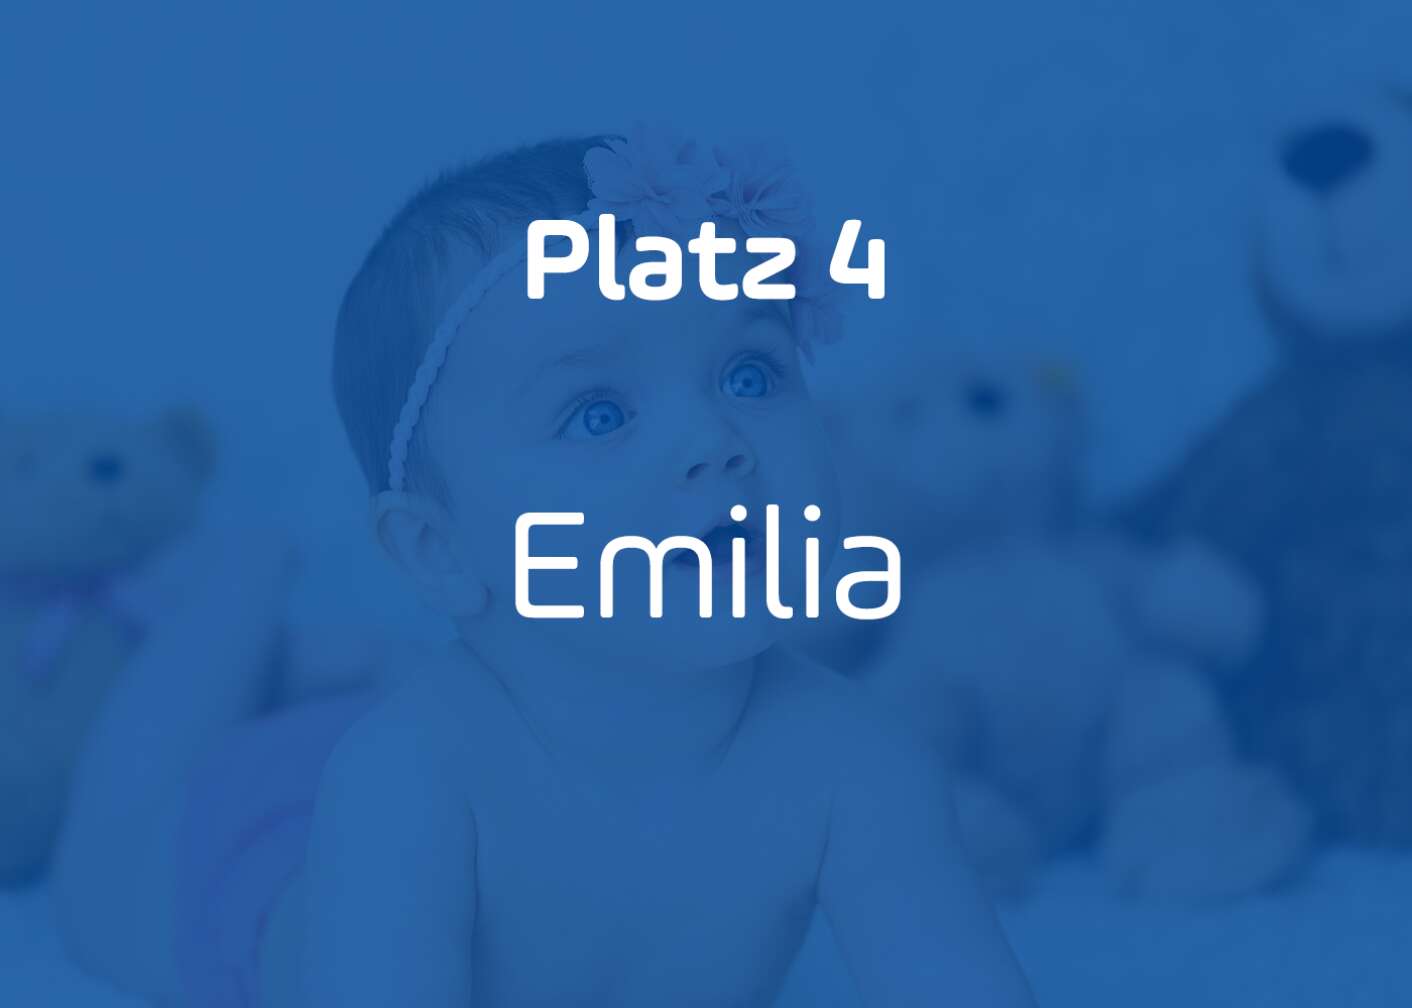 Emilia Platz 4